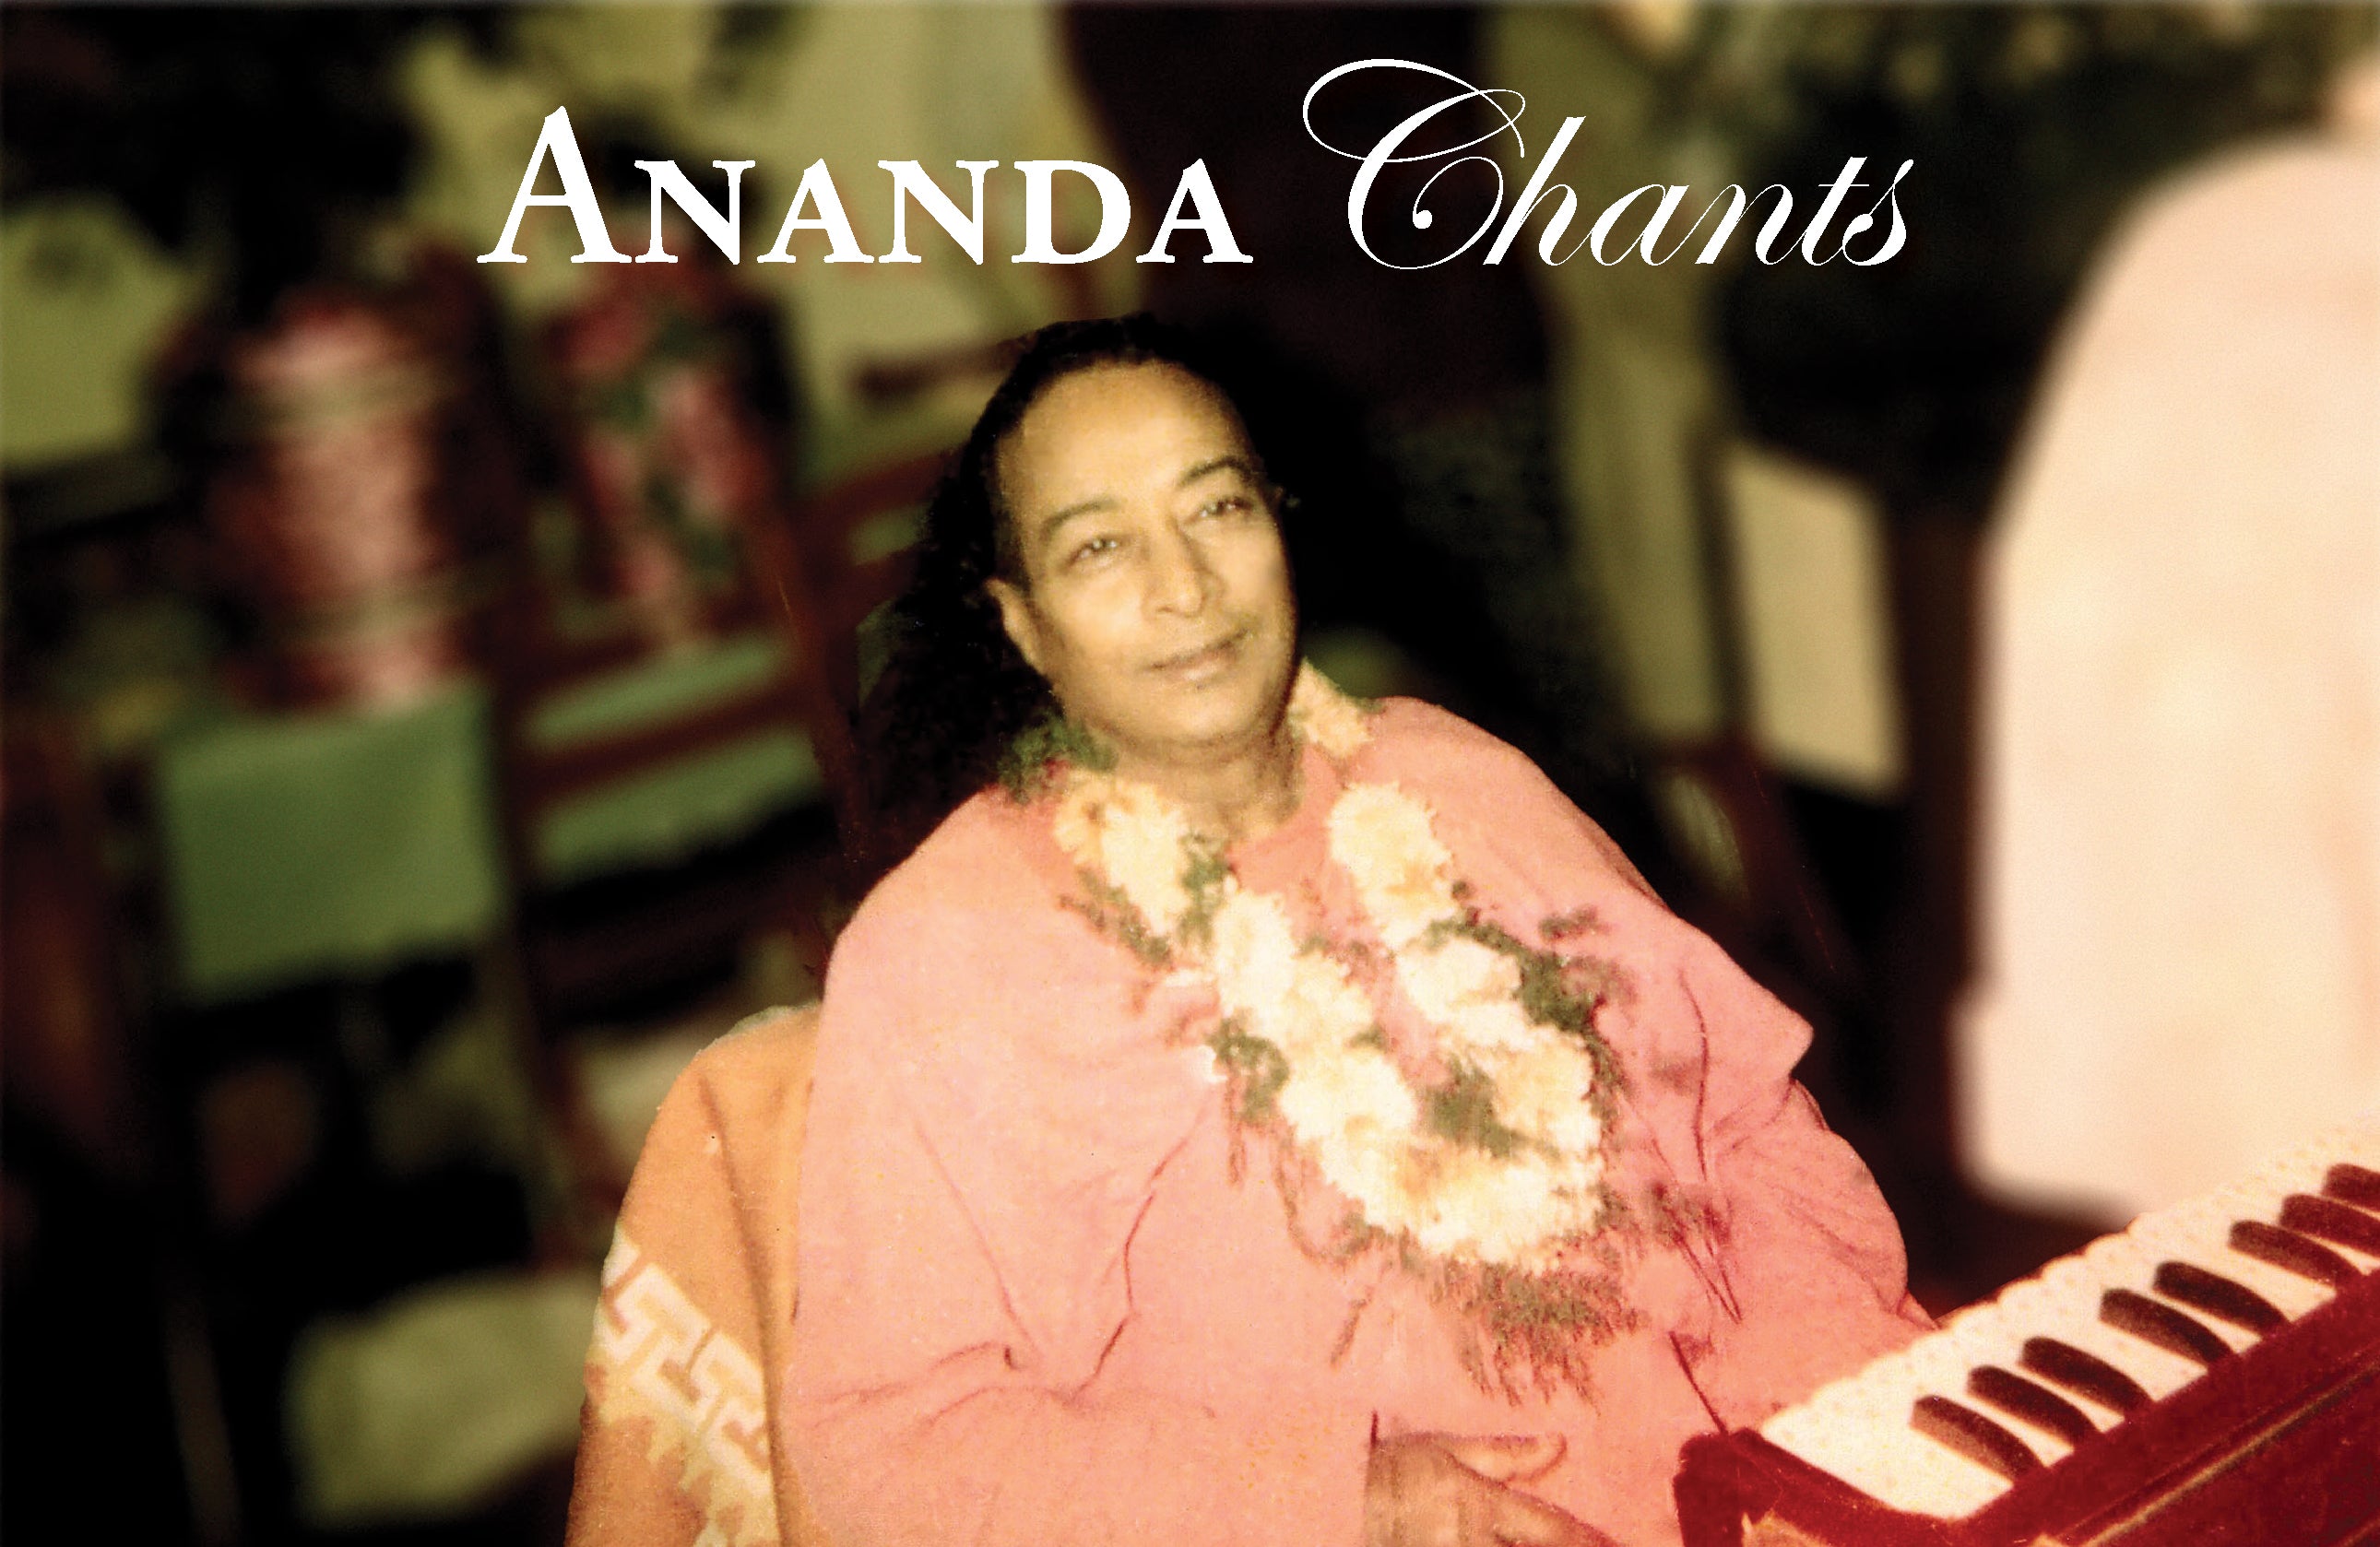 Ananda Chants